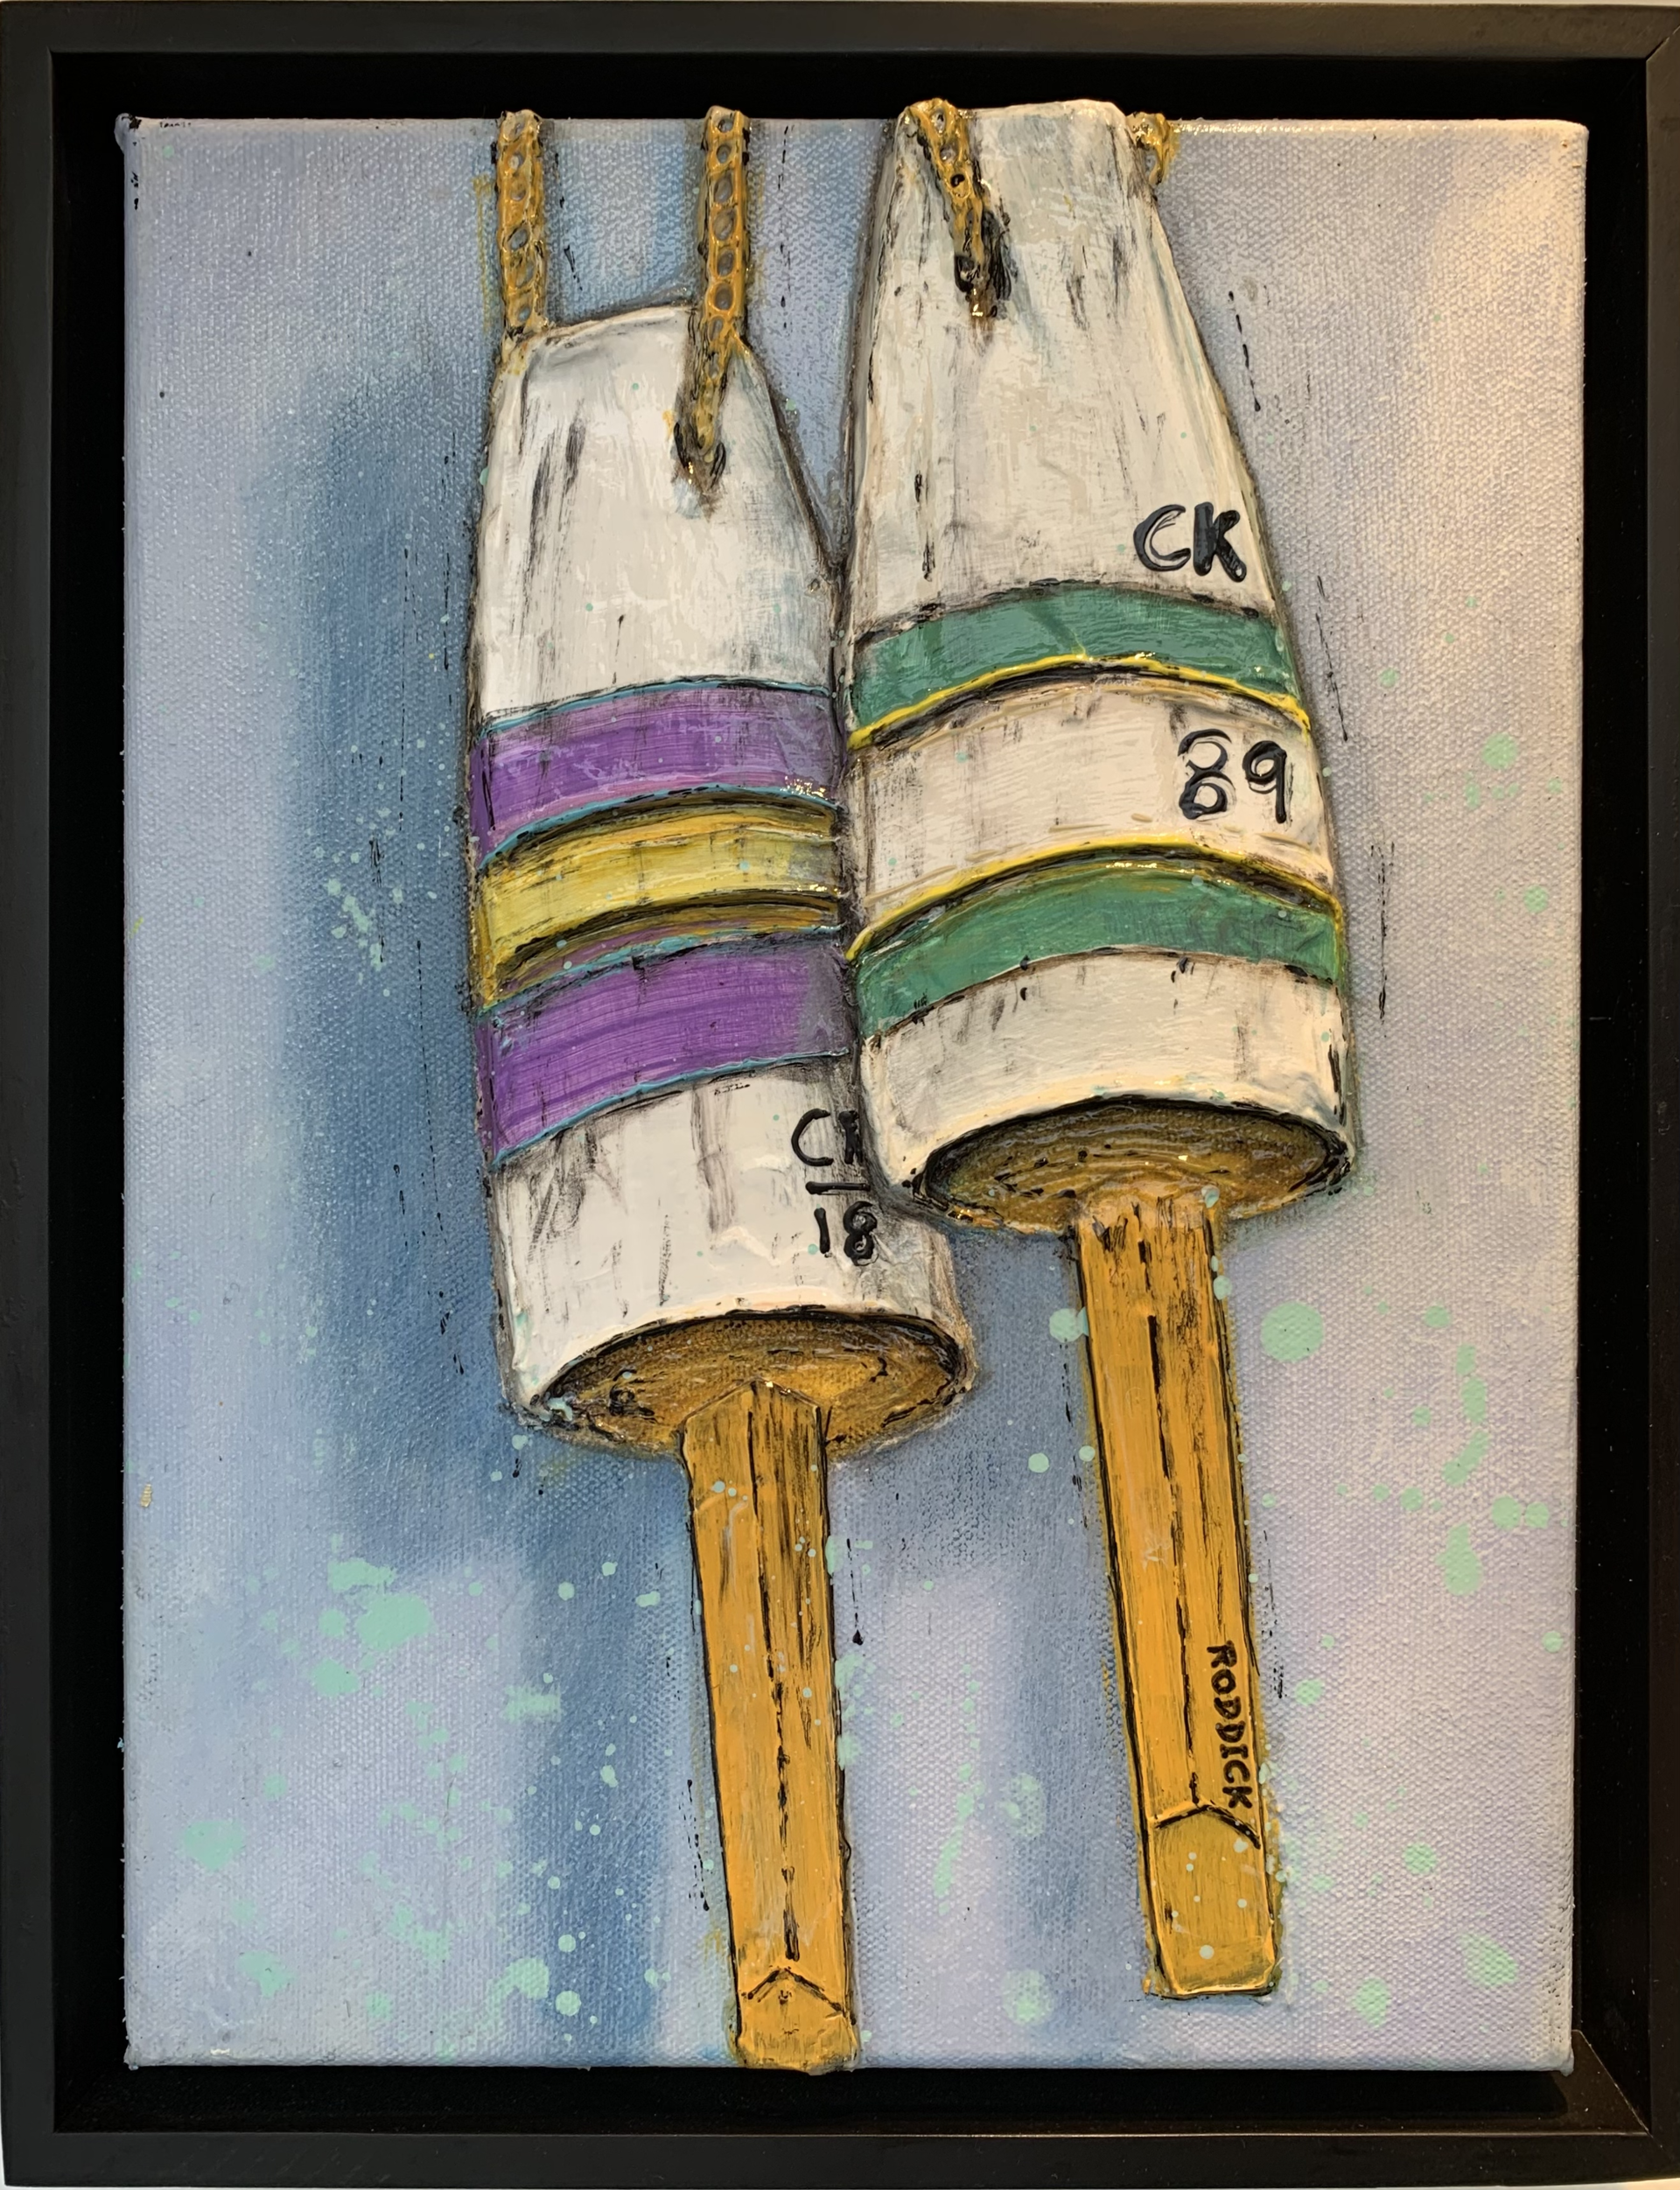 Buoy 11 by Christopher Roddick